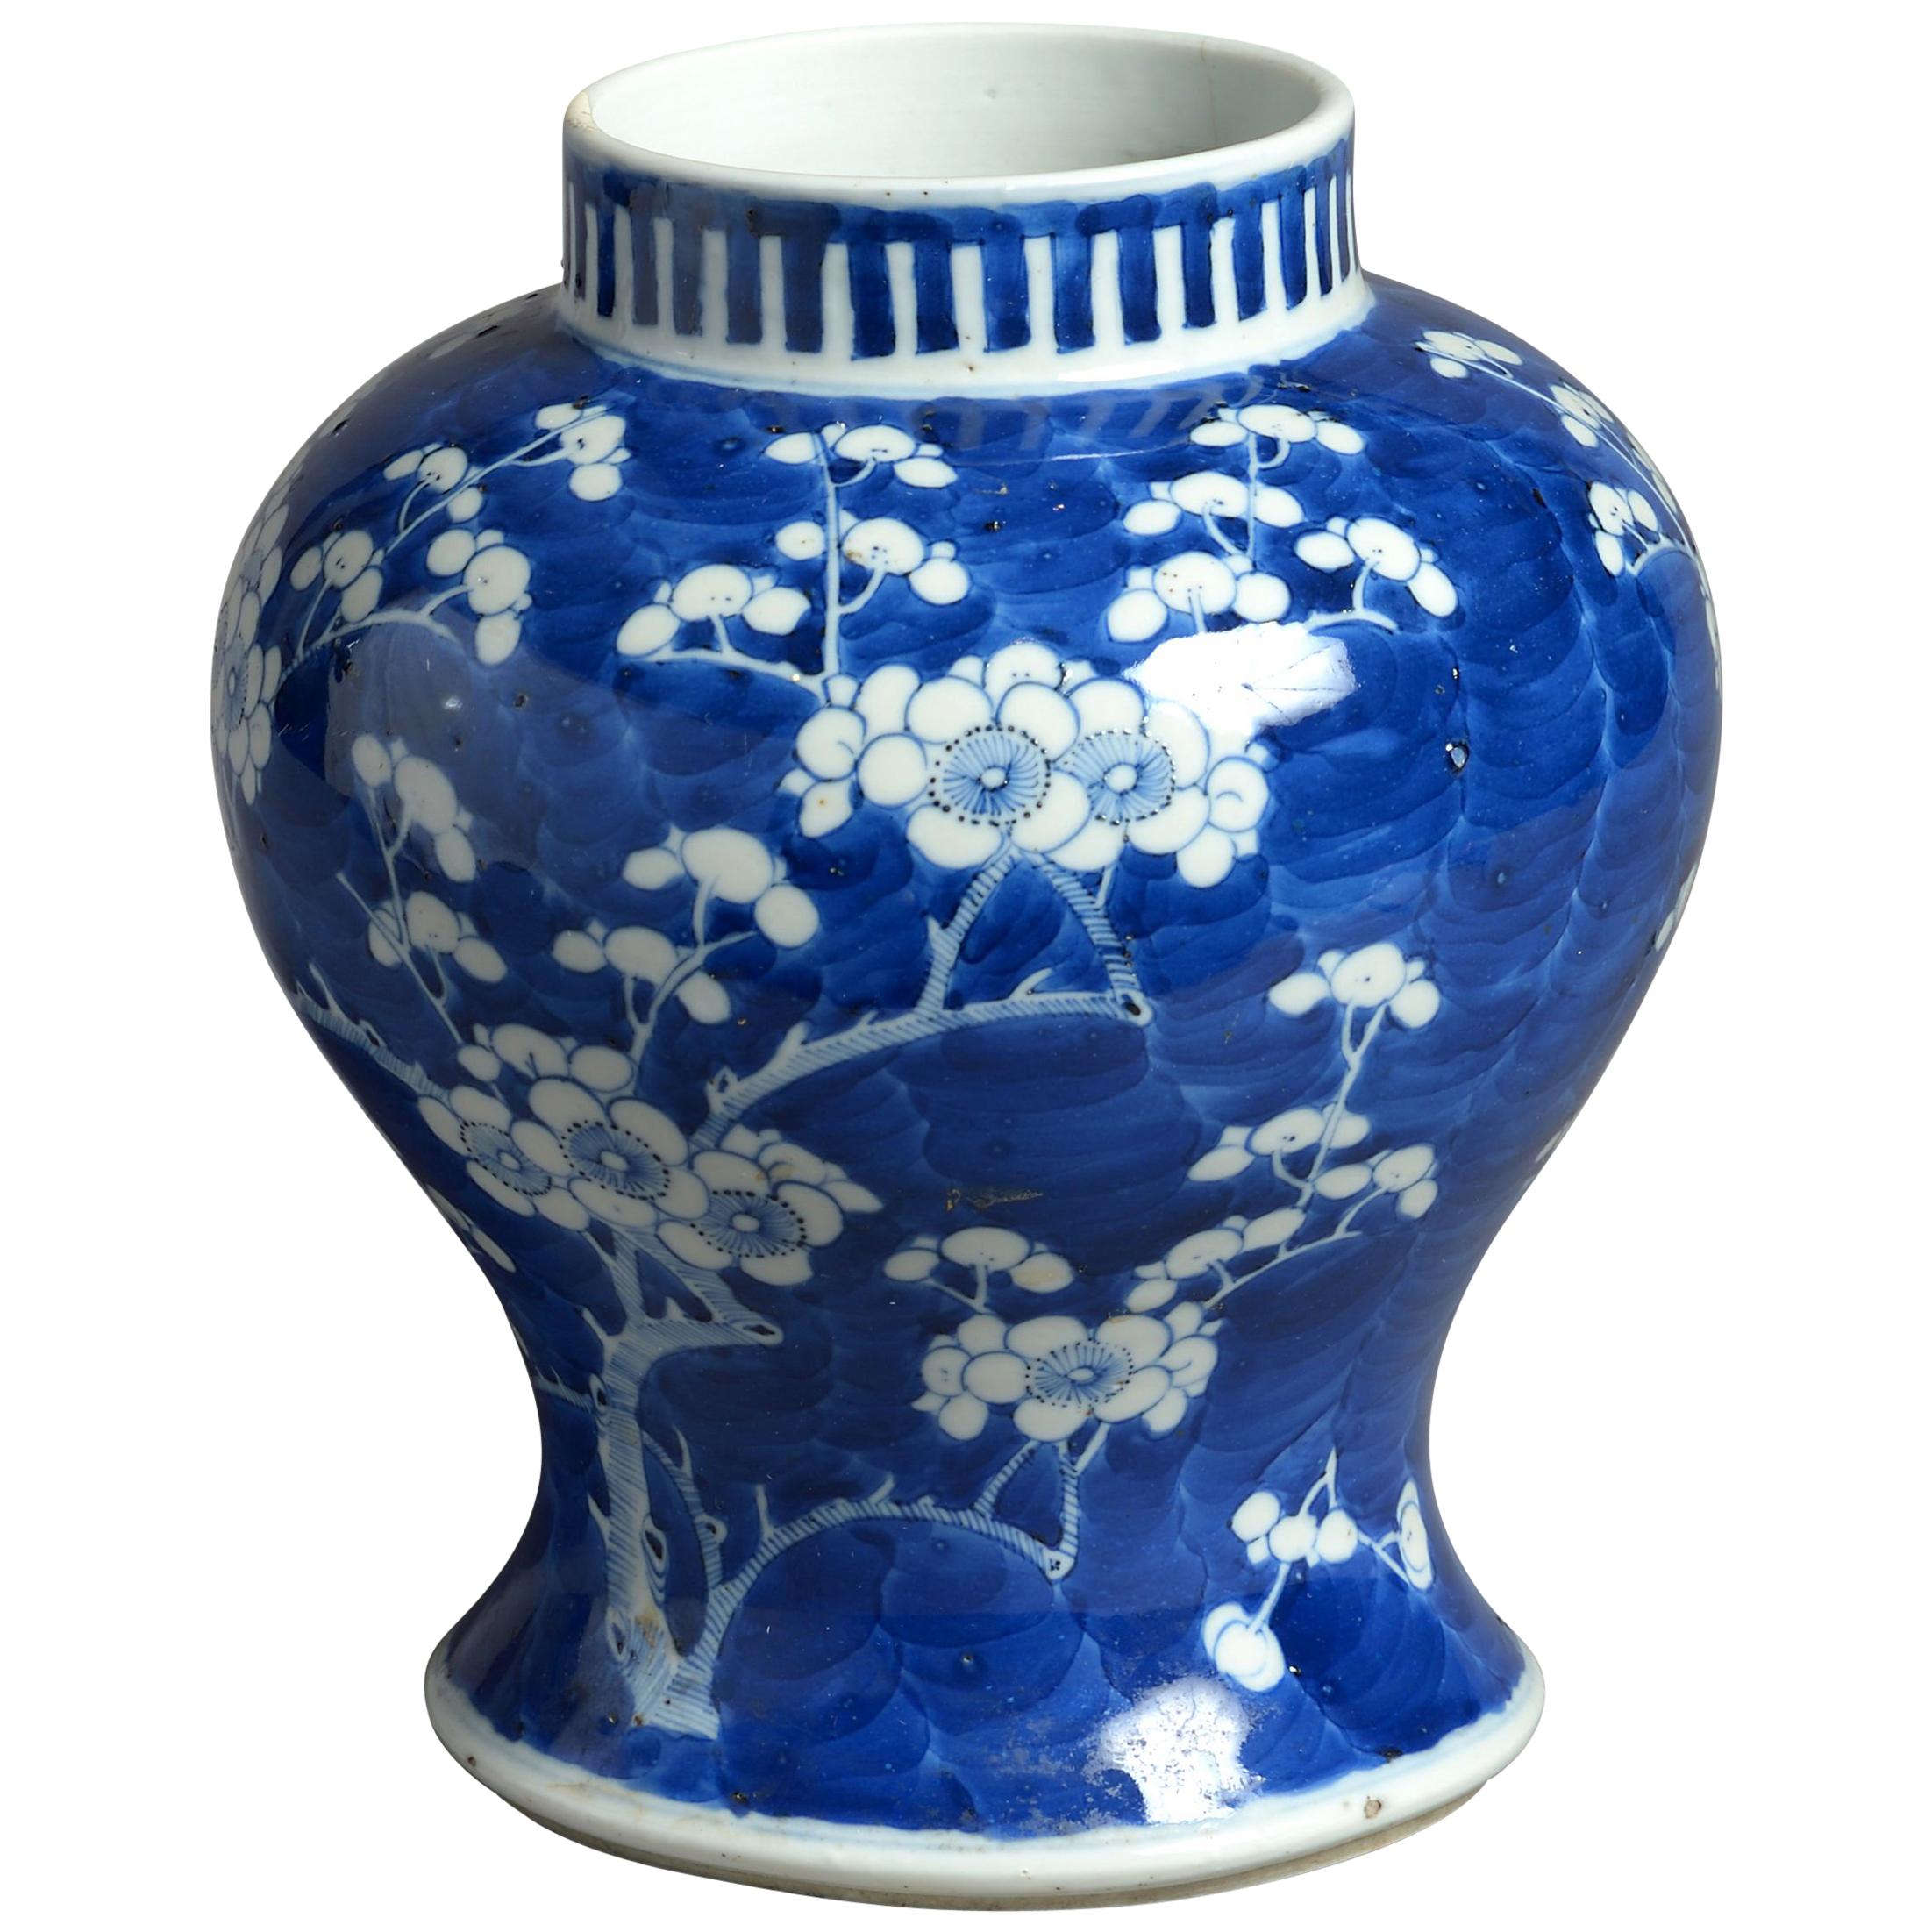 19th Century Blue and White Porcelain Vase